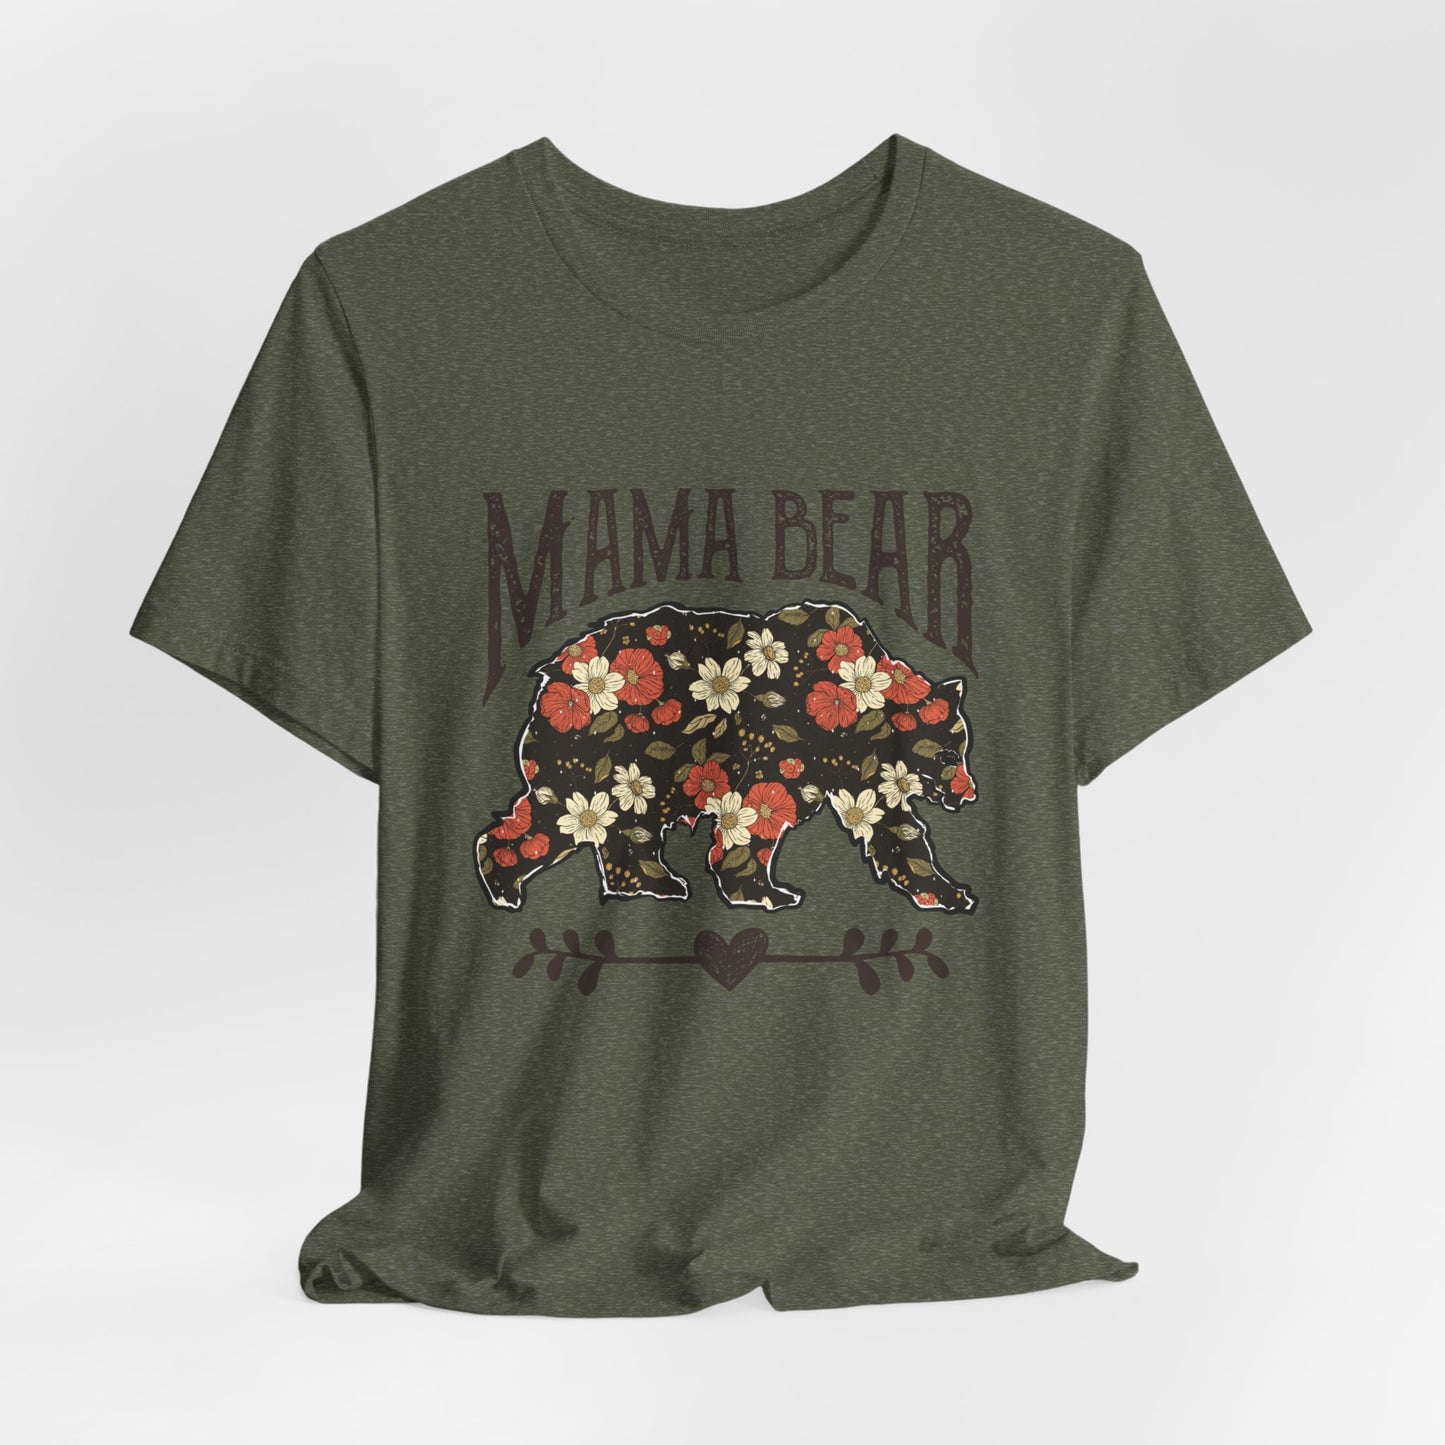 MAMA Bear Women's Short Sleeve Tee